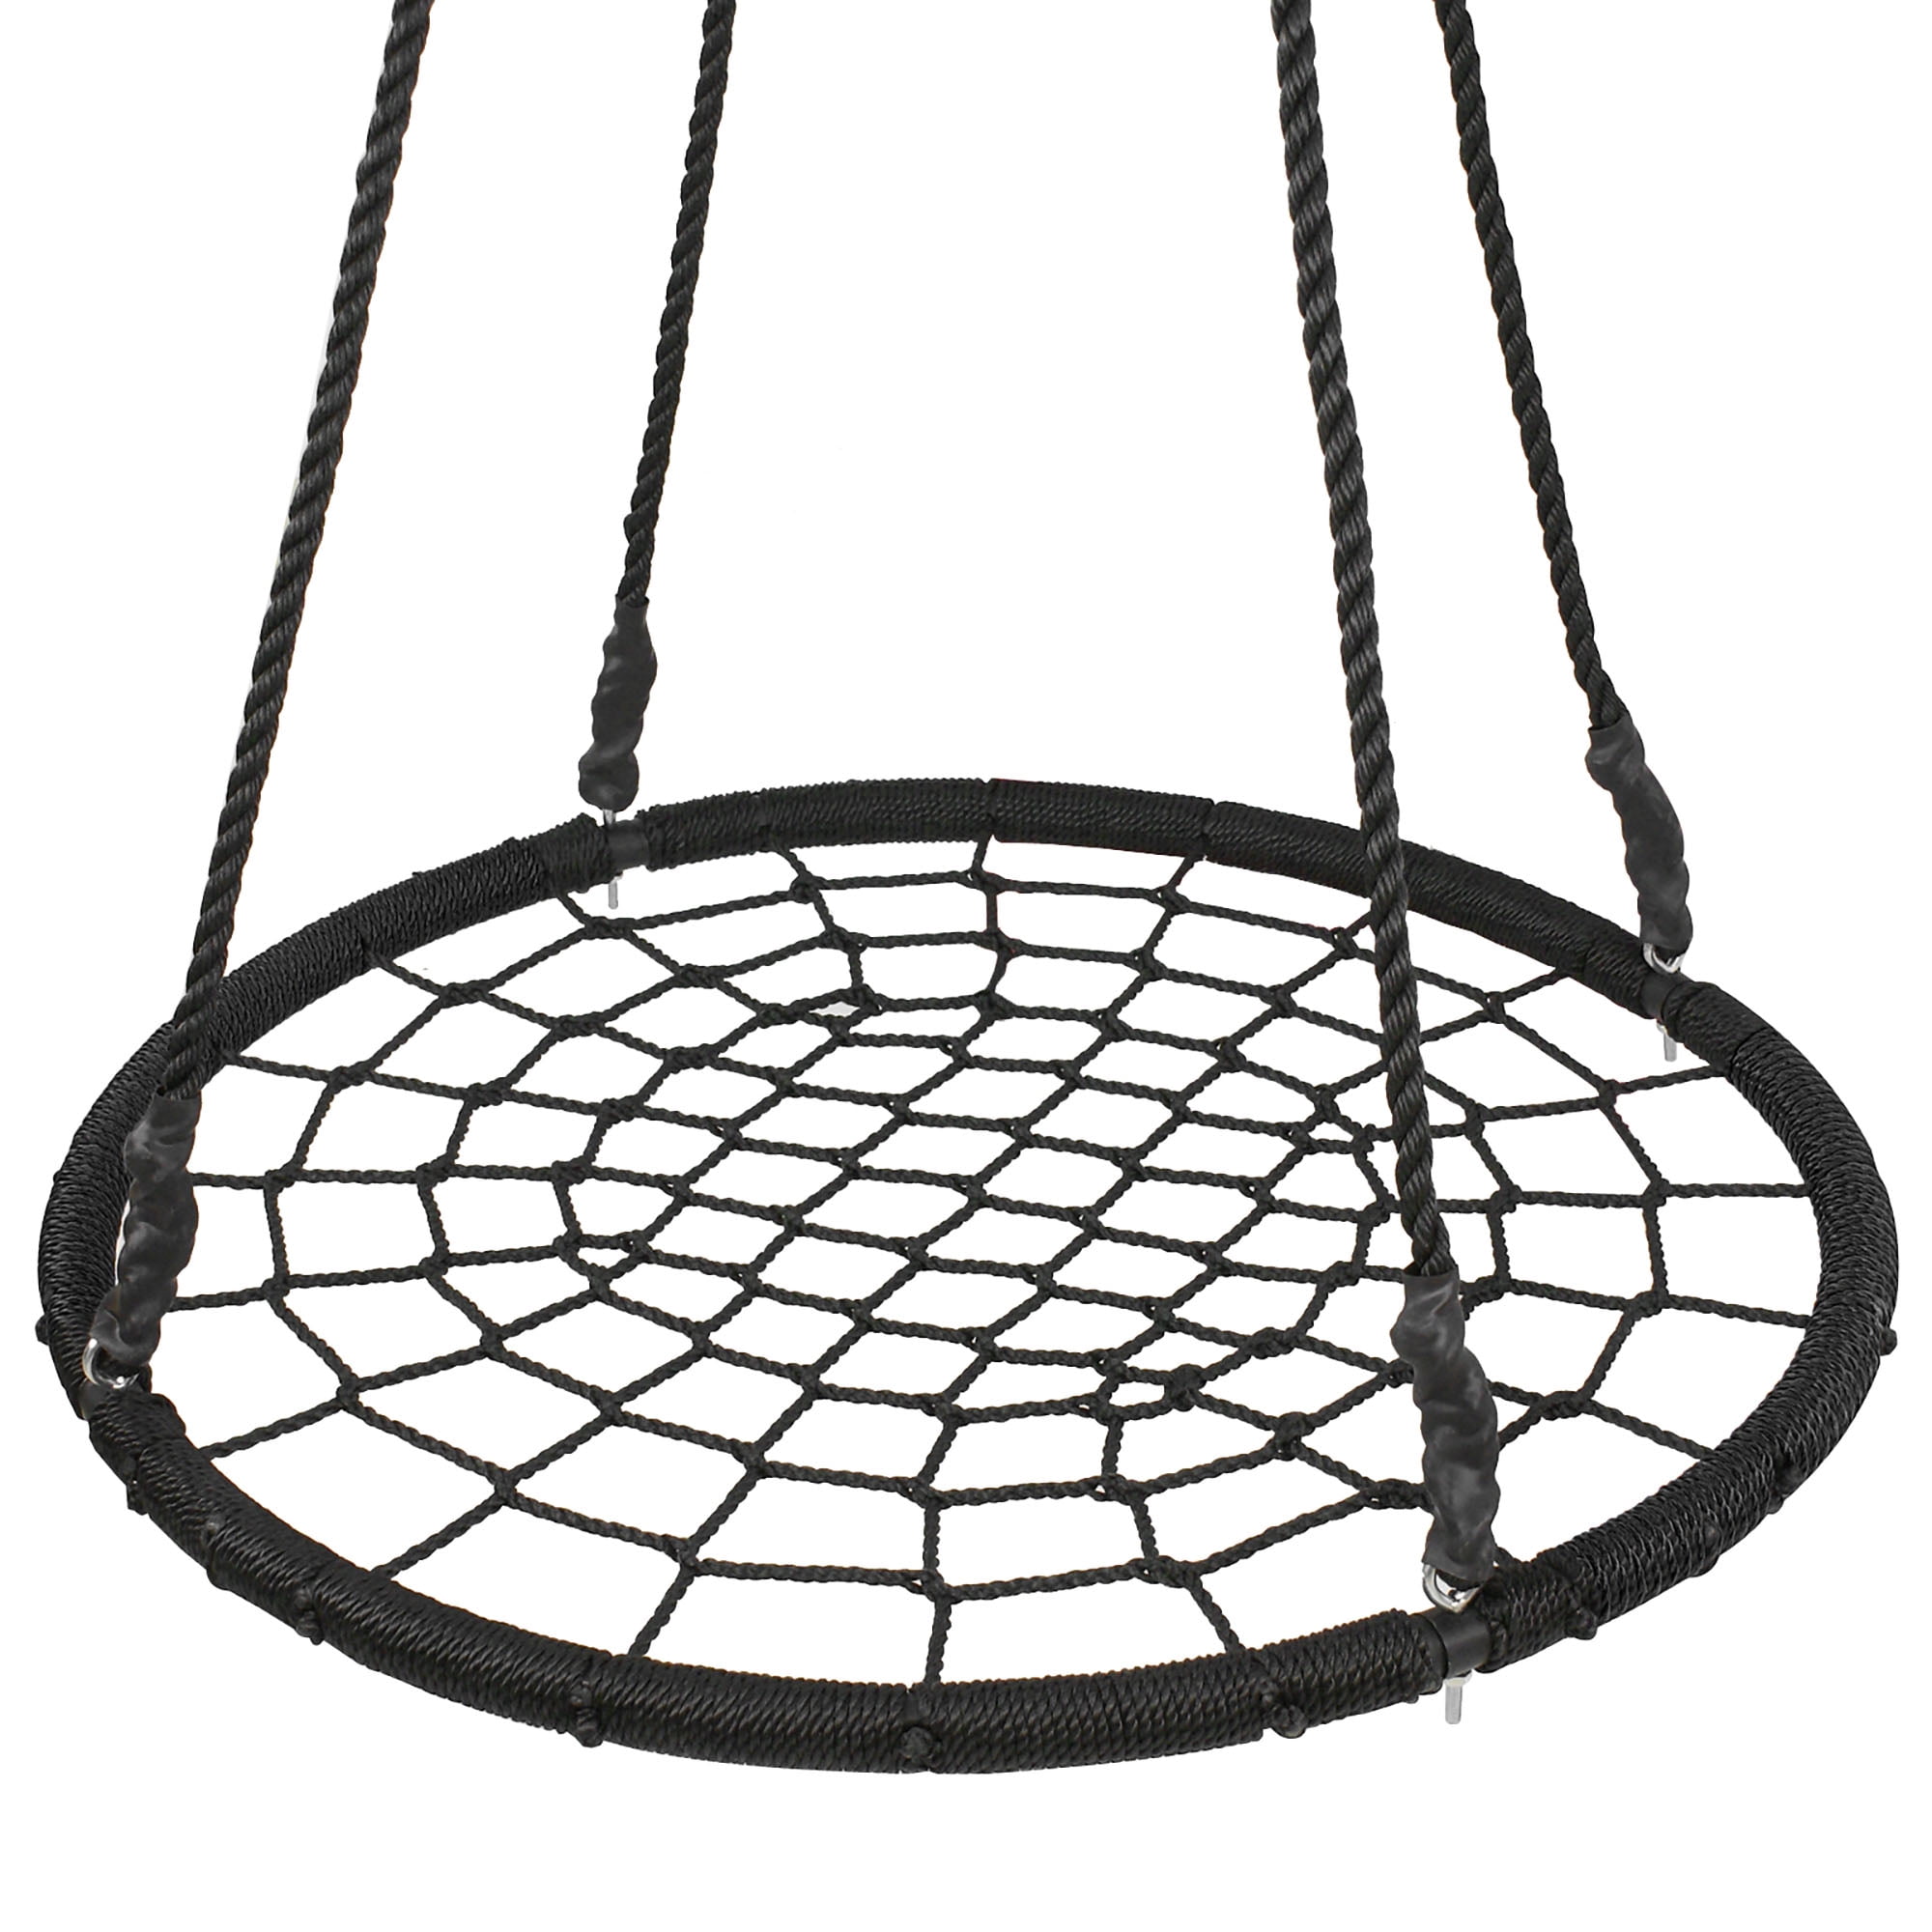 Zenstyle 40 inch Kids Spider Tree Swing - Large Round Spider Net Swing Platform 71 inch Adjustable Detachablee Nylon Rope Kids Adults, Black